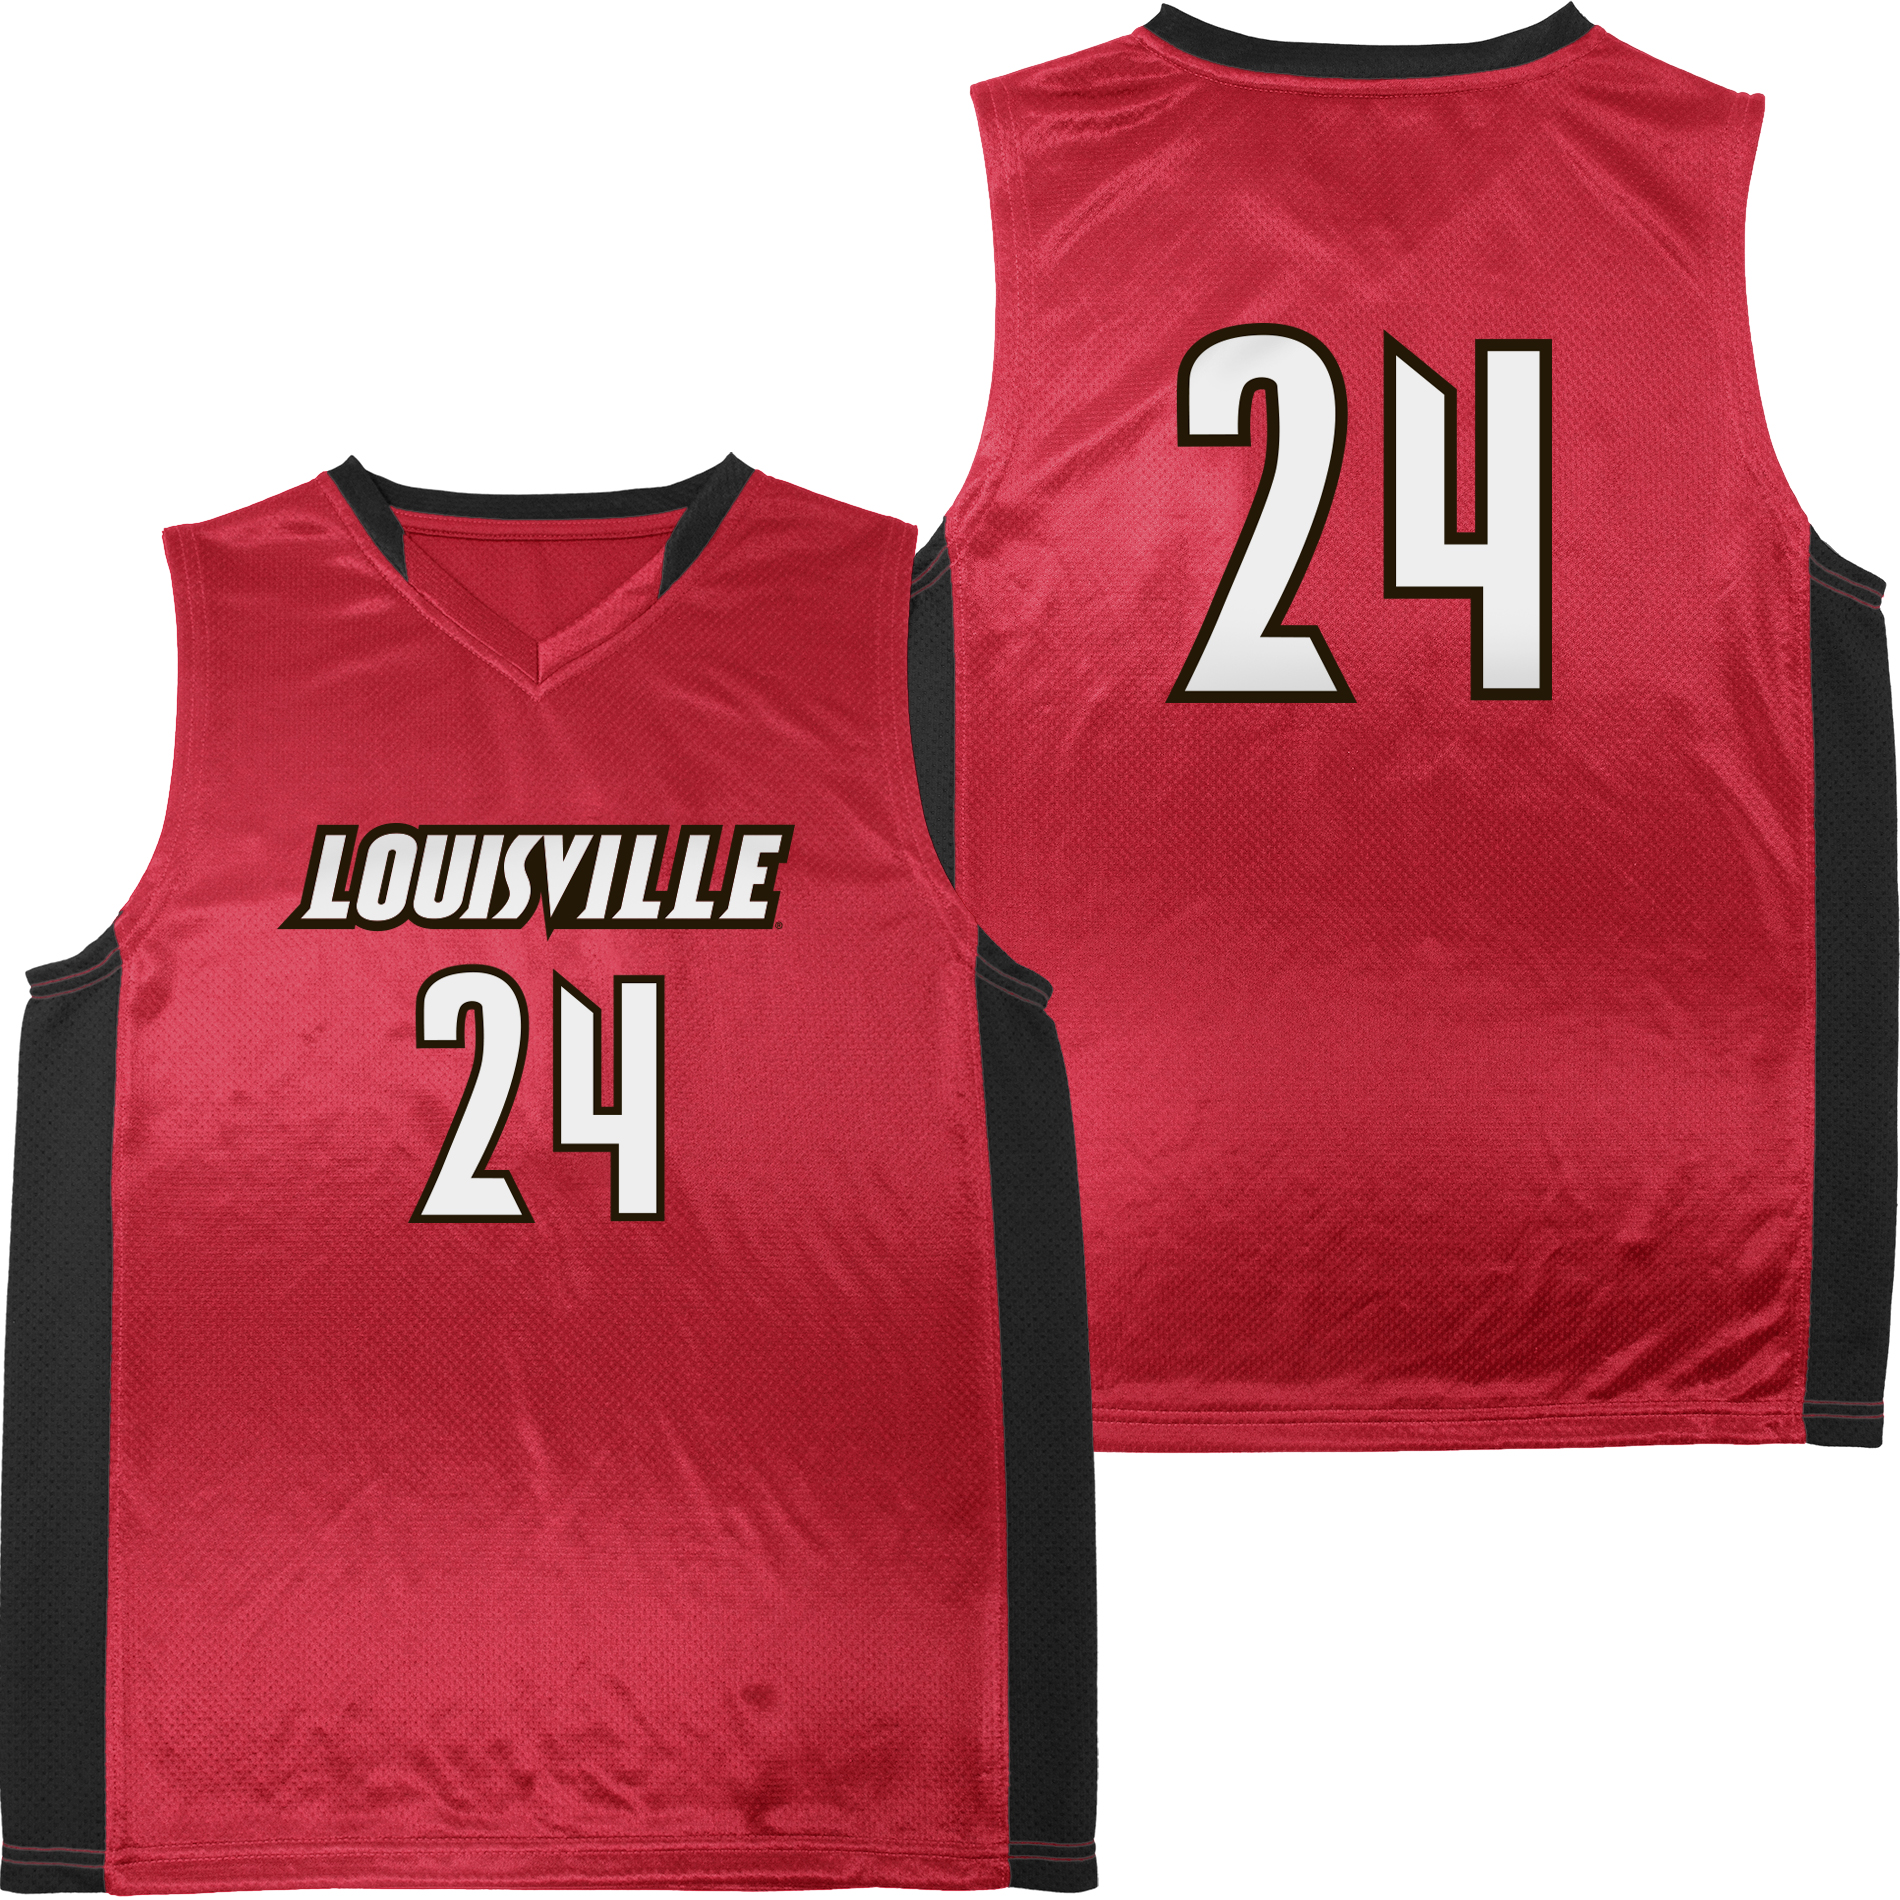 NCAA Youth University of Louisville Cardinals Basketball Jersey